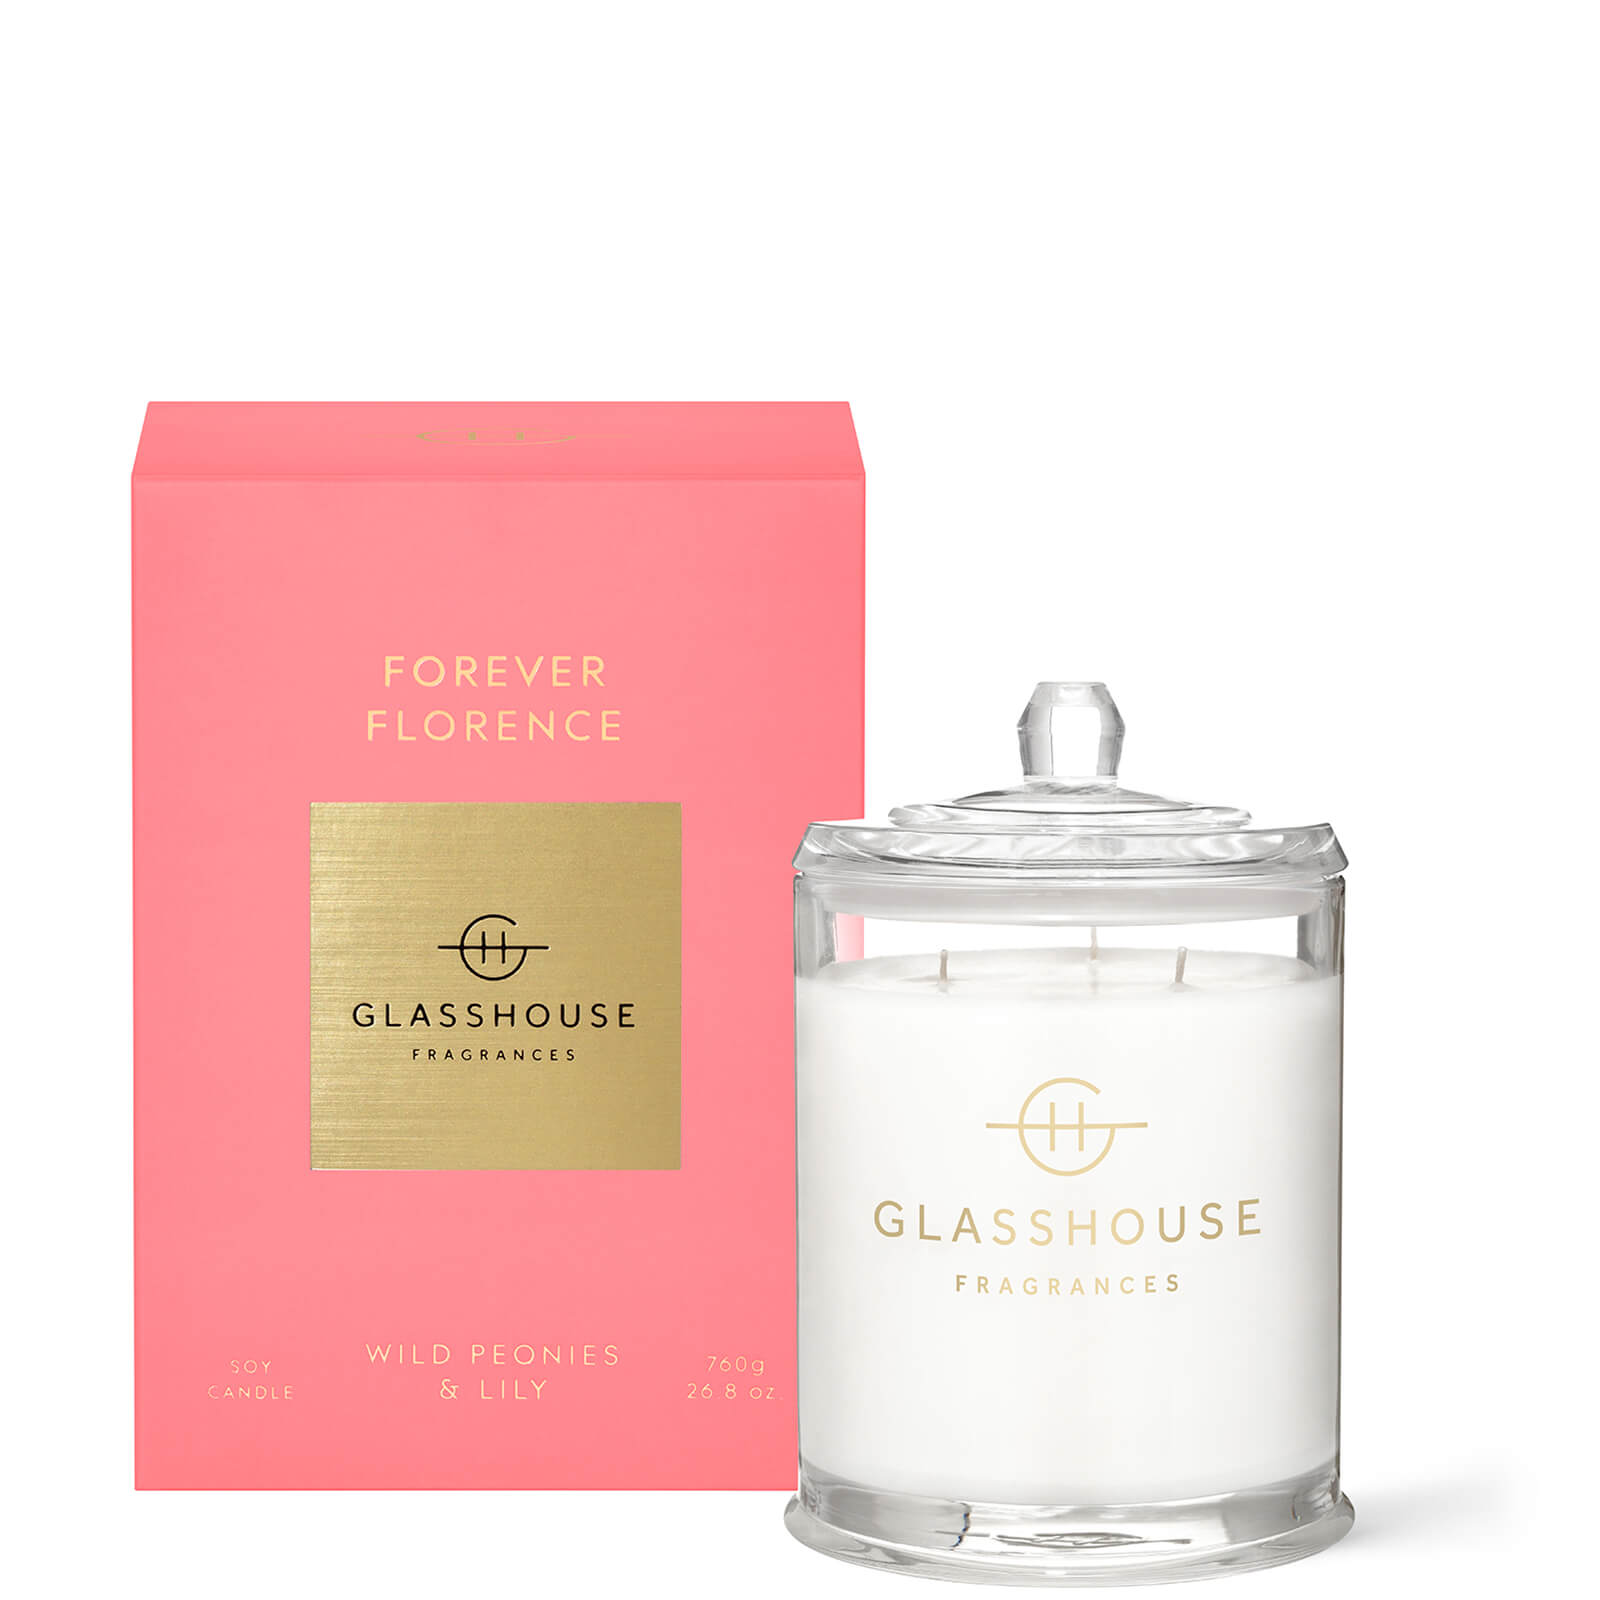 Glasshouse Fragrances Glasshouse Forever Florence Candle 760g